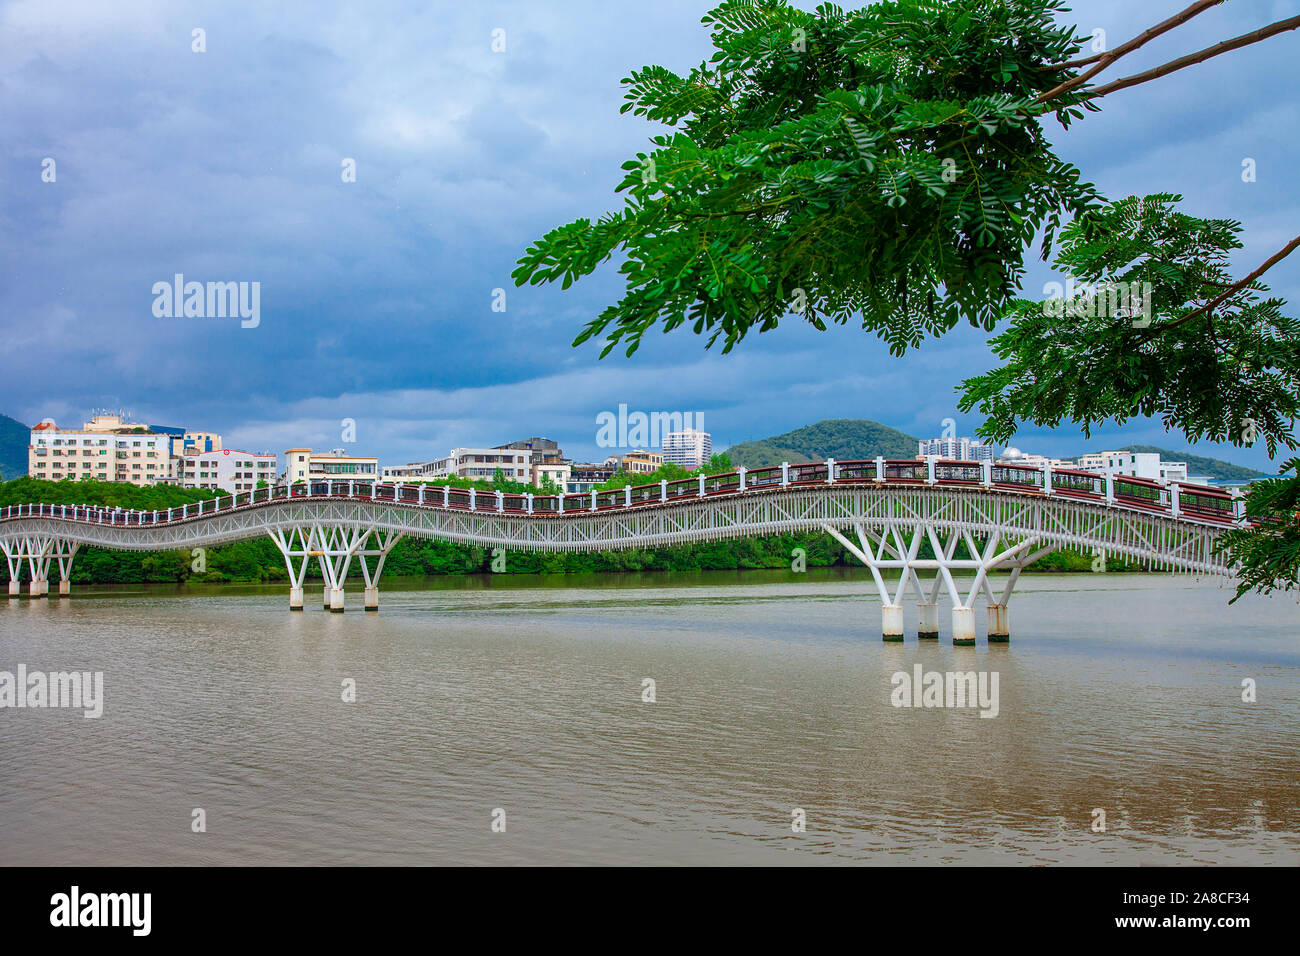 China Hainan Sanya City River Bridge Landmark Stock Photo